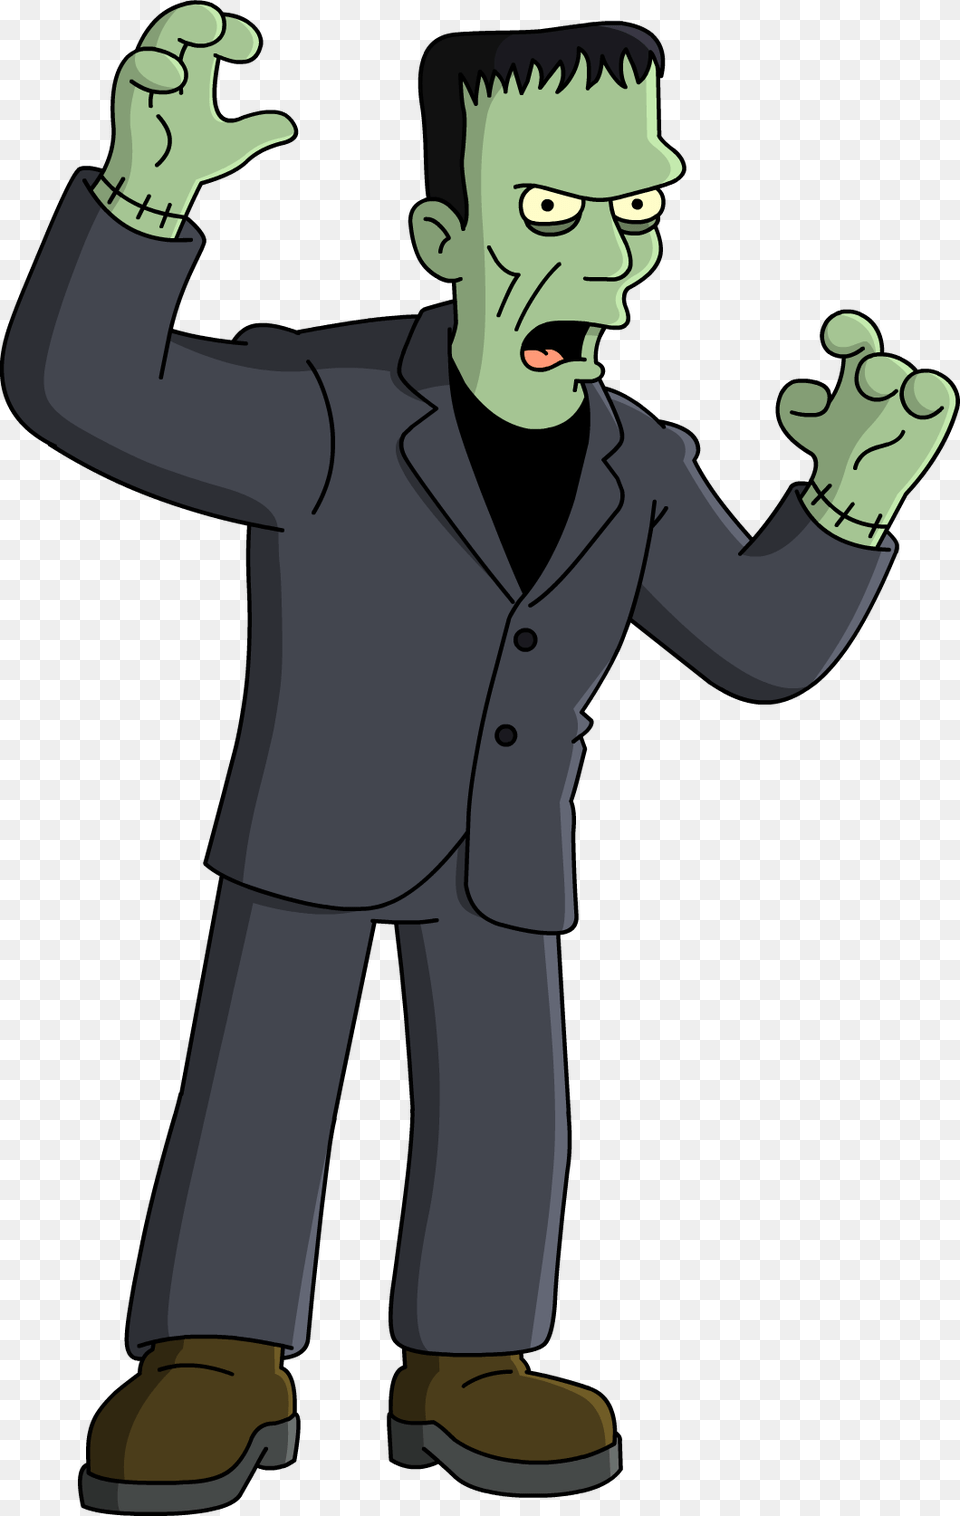 Frankensteinsmonster The Monster, Person, Body Part, Hand, Book Png Image